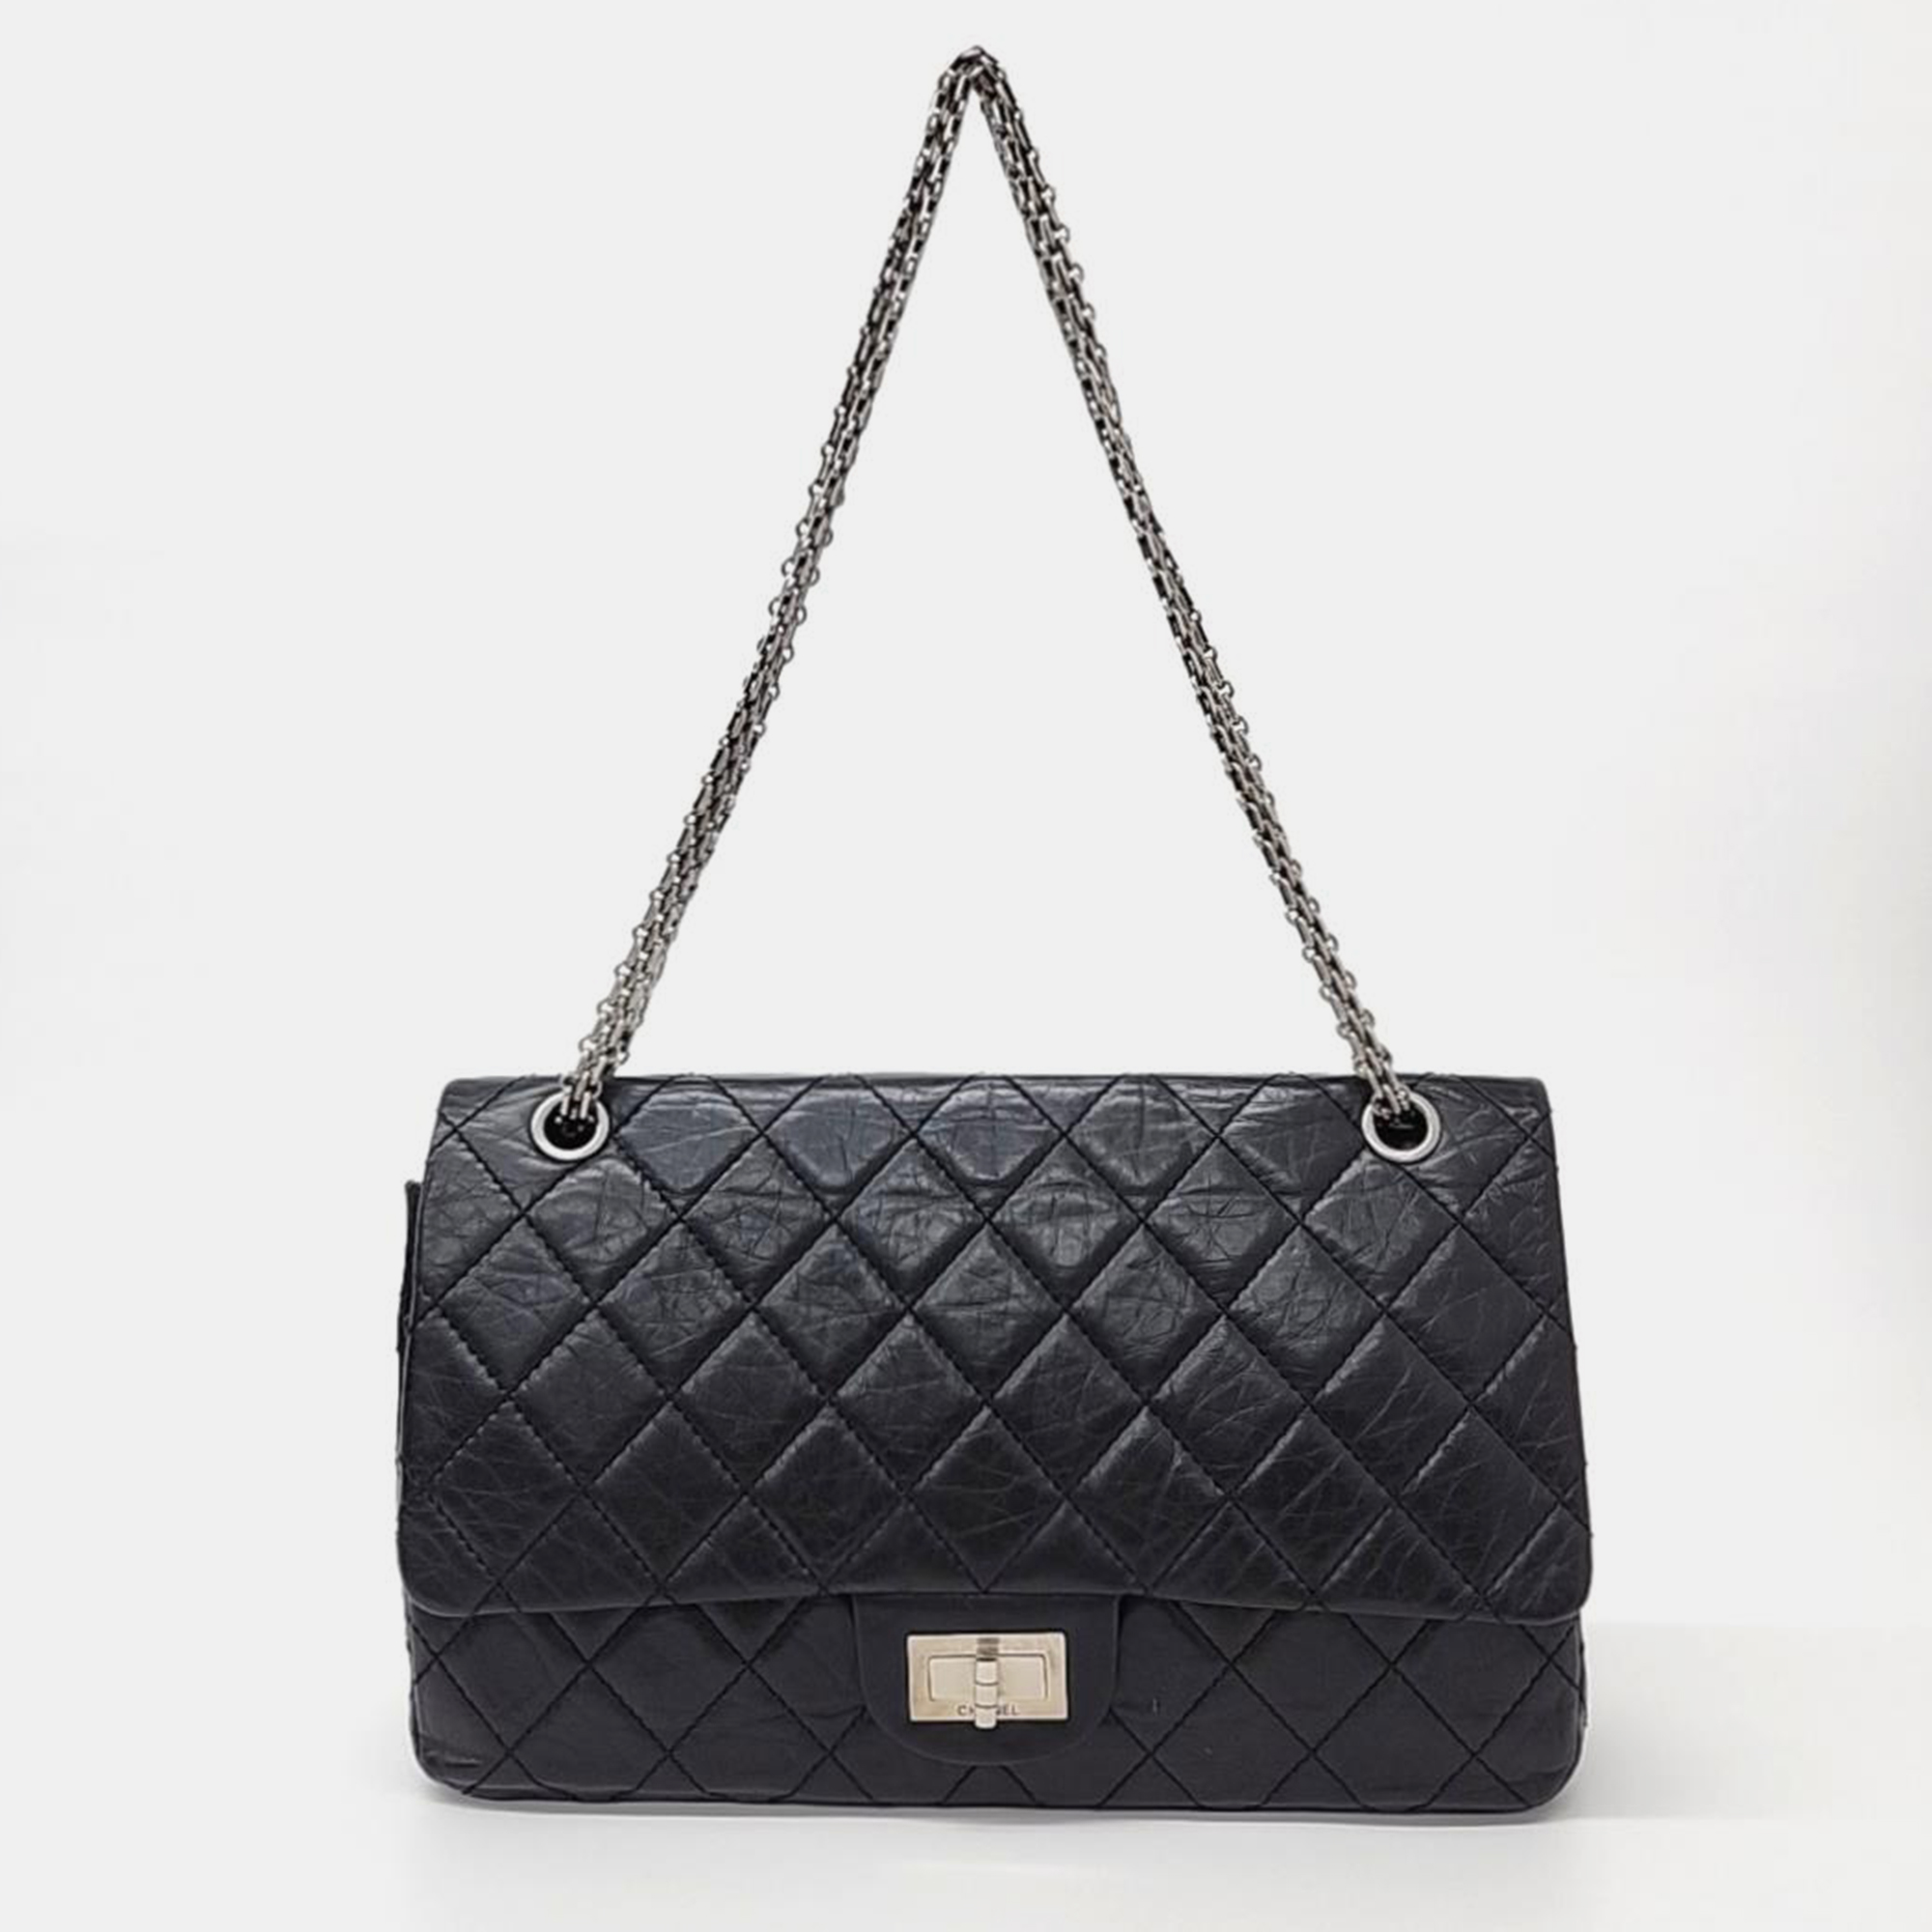 Chanel black leather reissue 2.55 flap bag